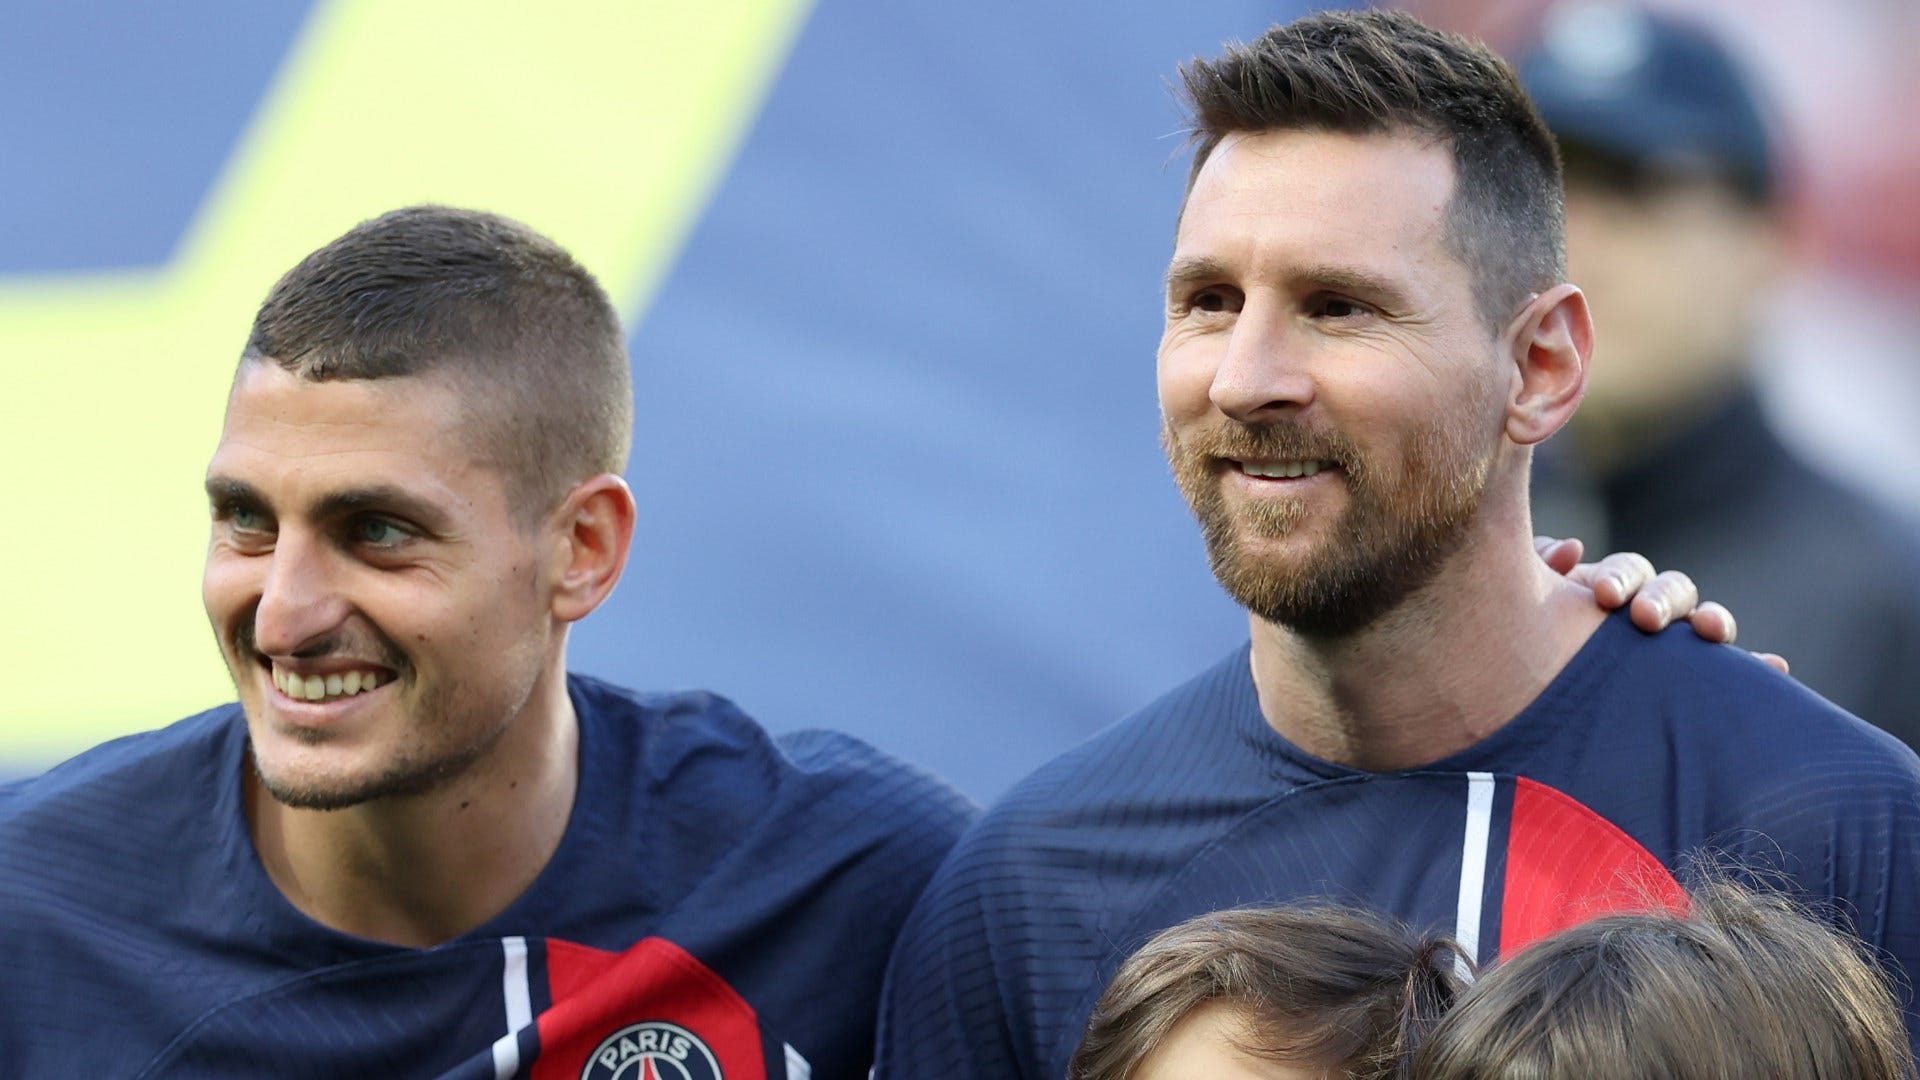 'You already know' - Lionel Messi sends message to ex-PSG team-mate Marco Verratti as he completes move to Qatari side Al-Arabi